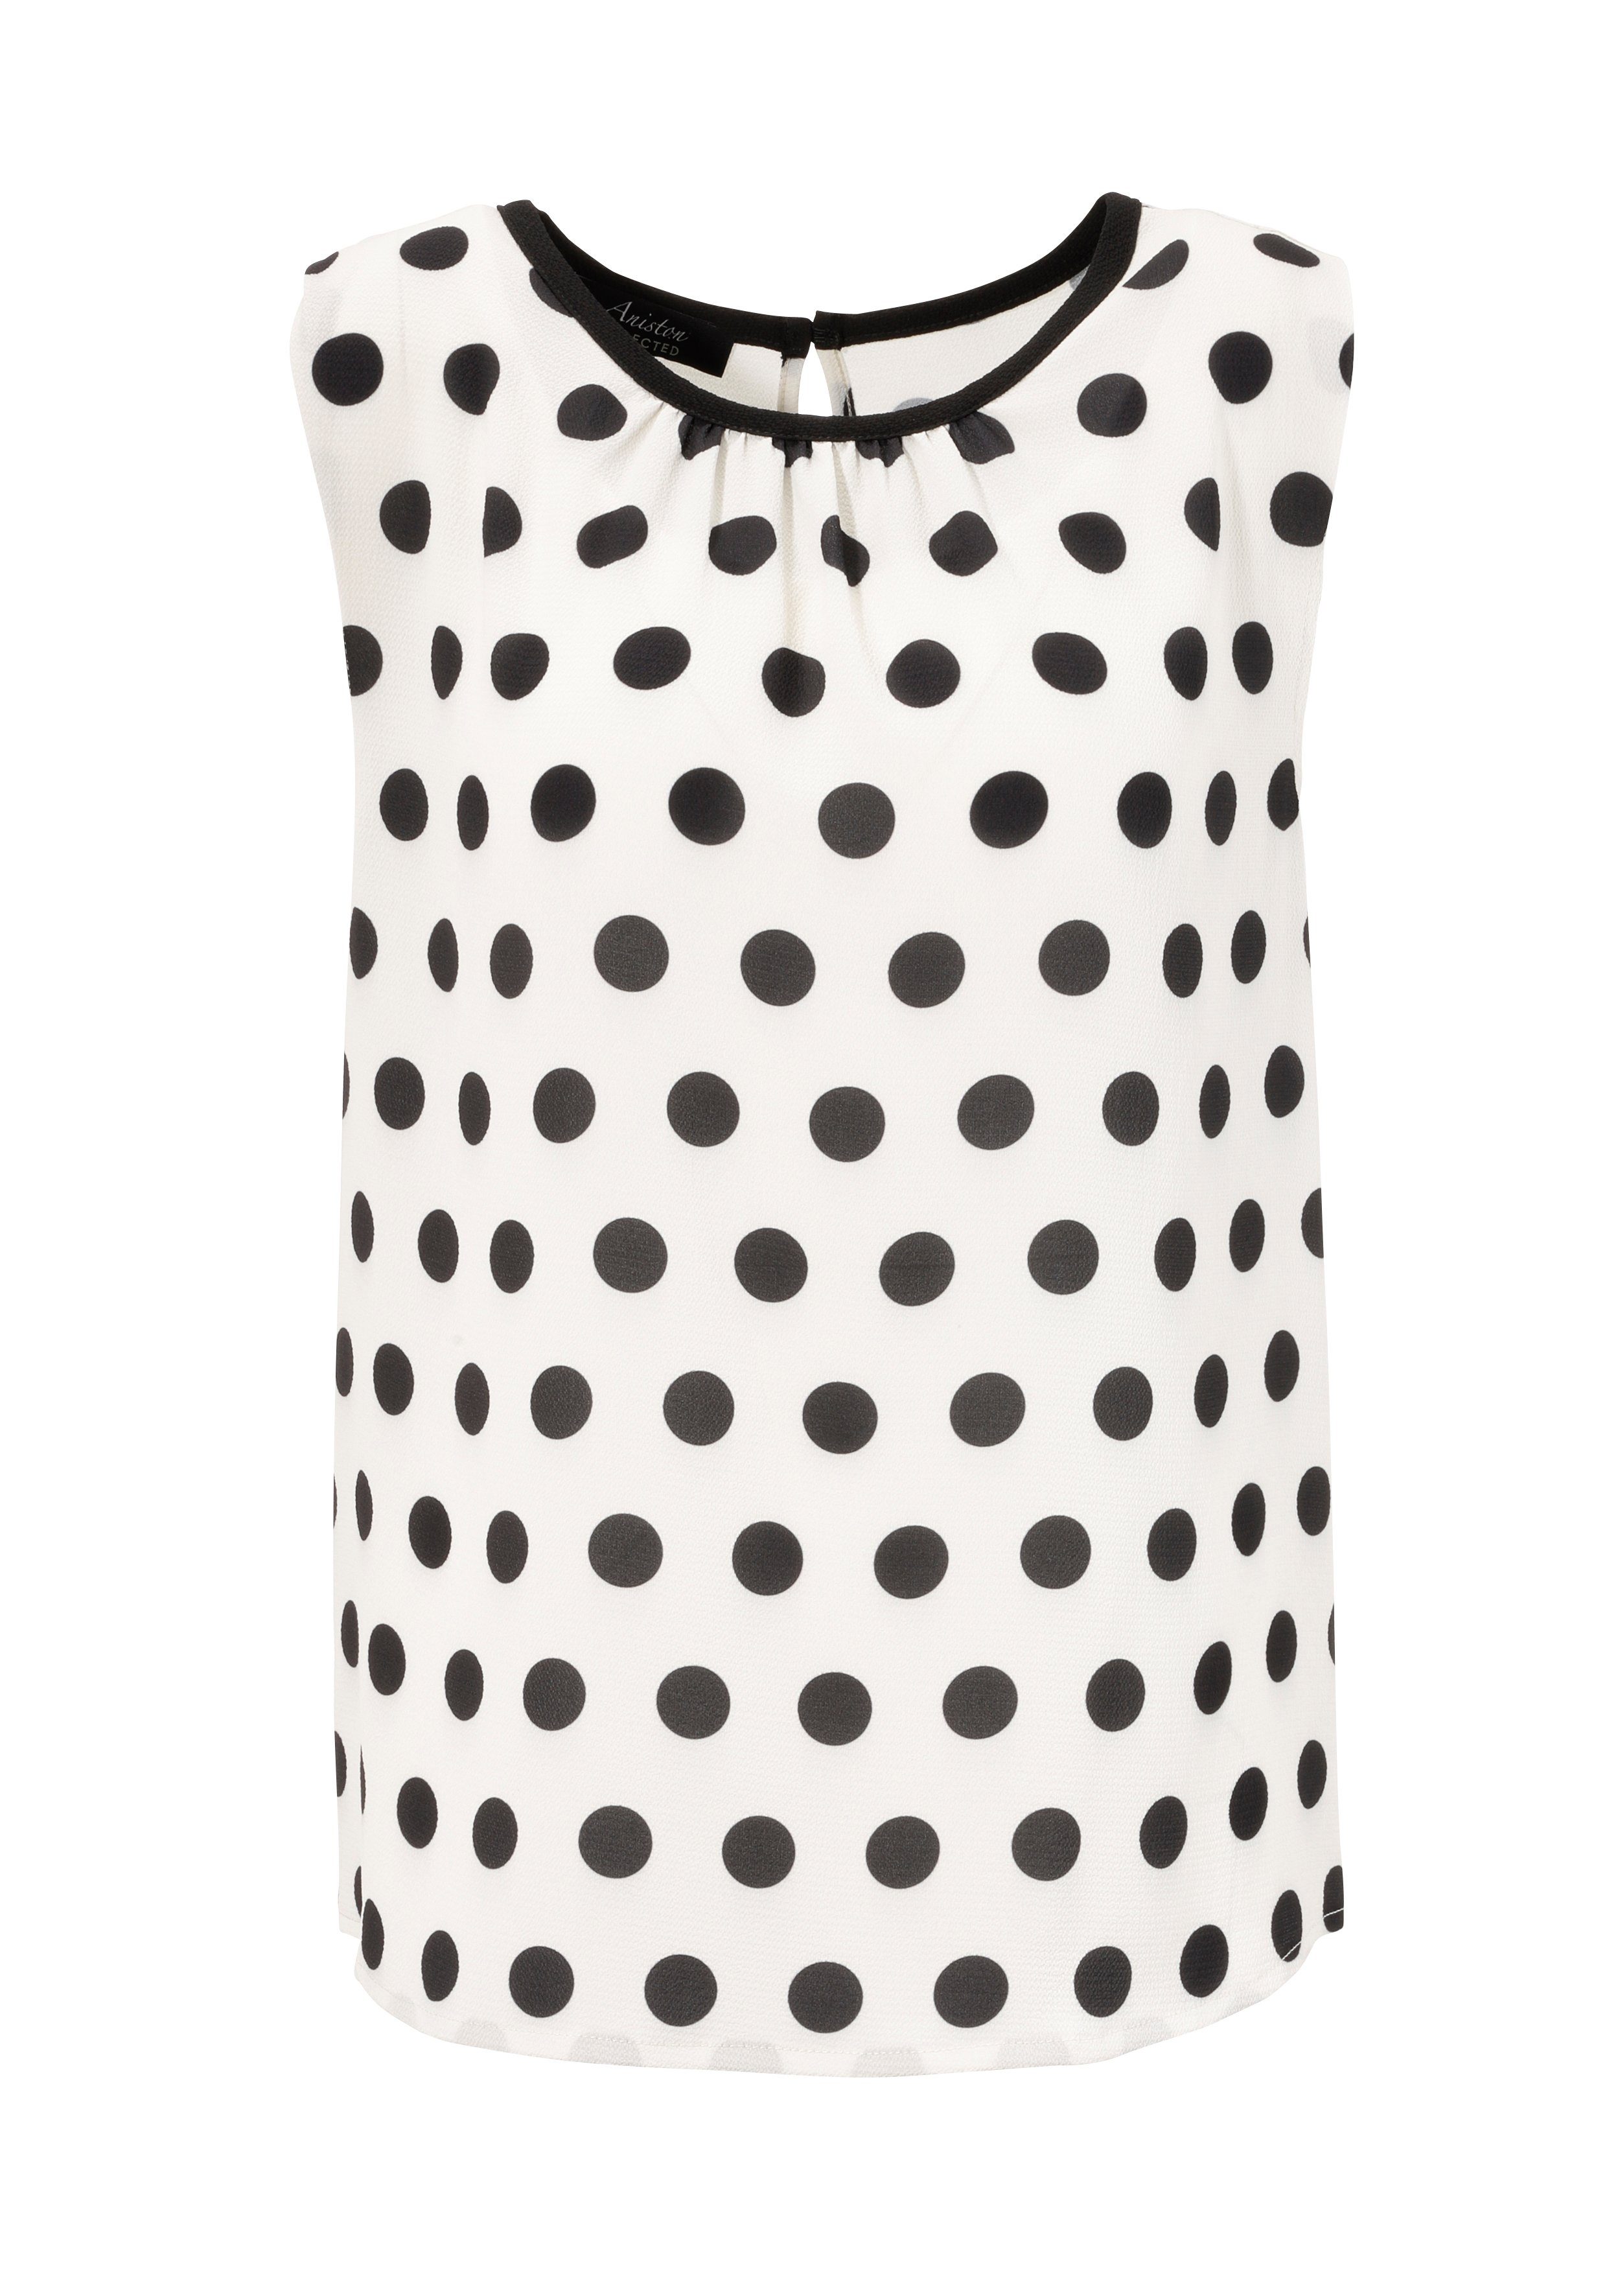 SELECTED KOLLEKTION elegantem mit Blusentop NEUE offwhite-schwarz Punkte-Druck - Aniston